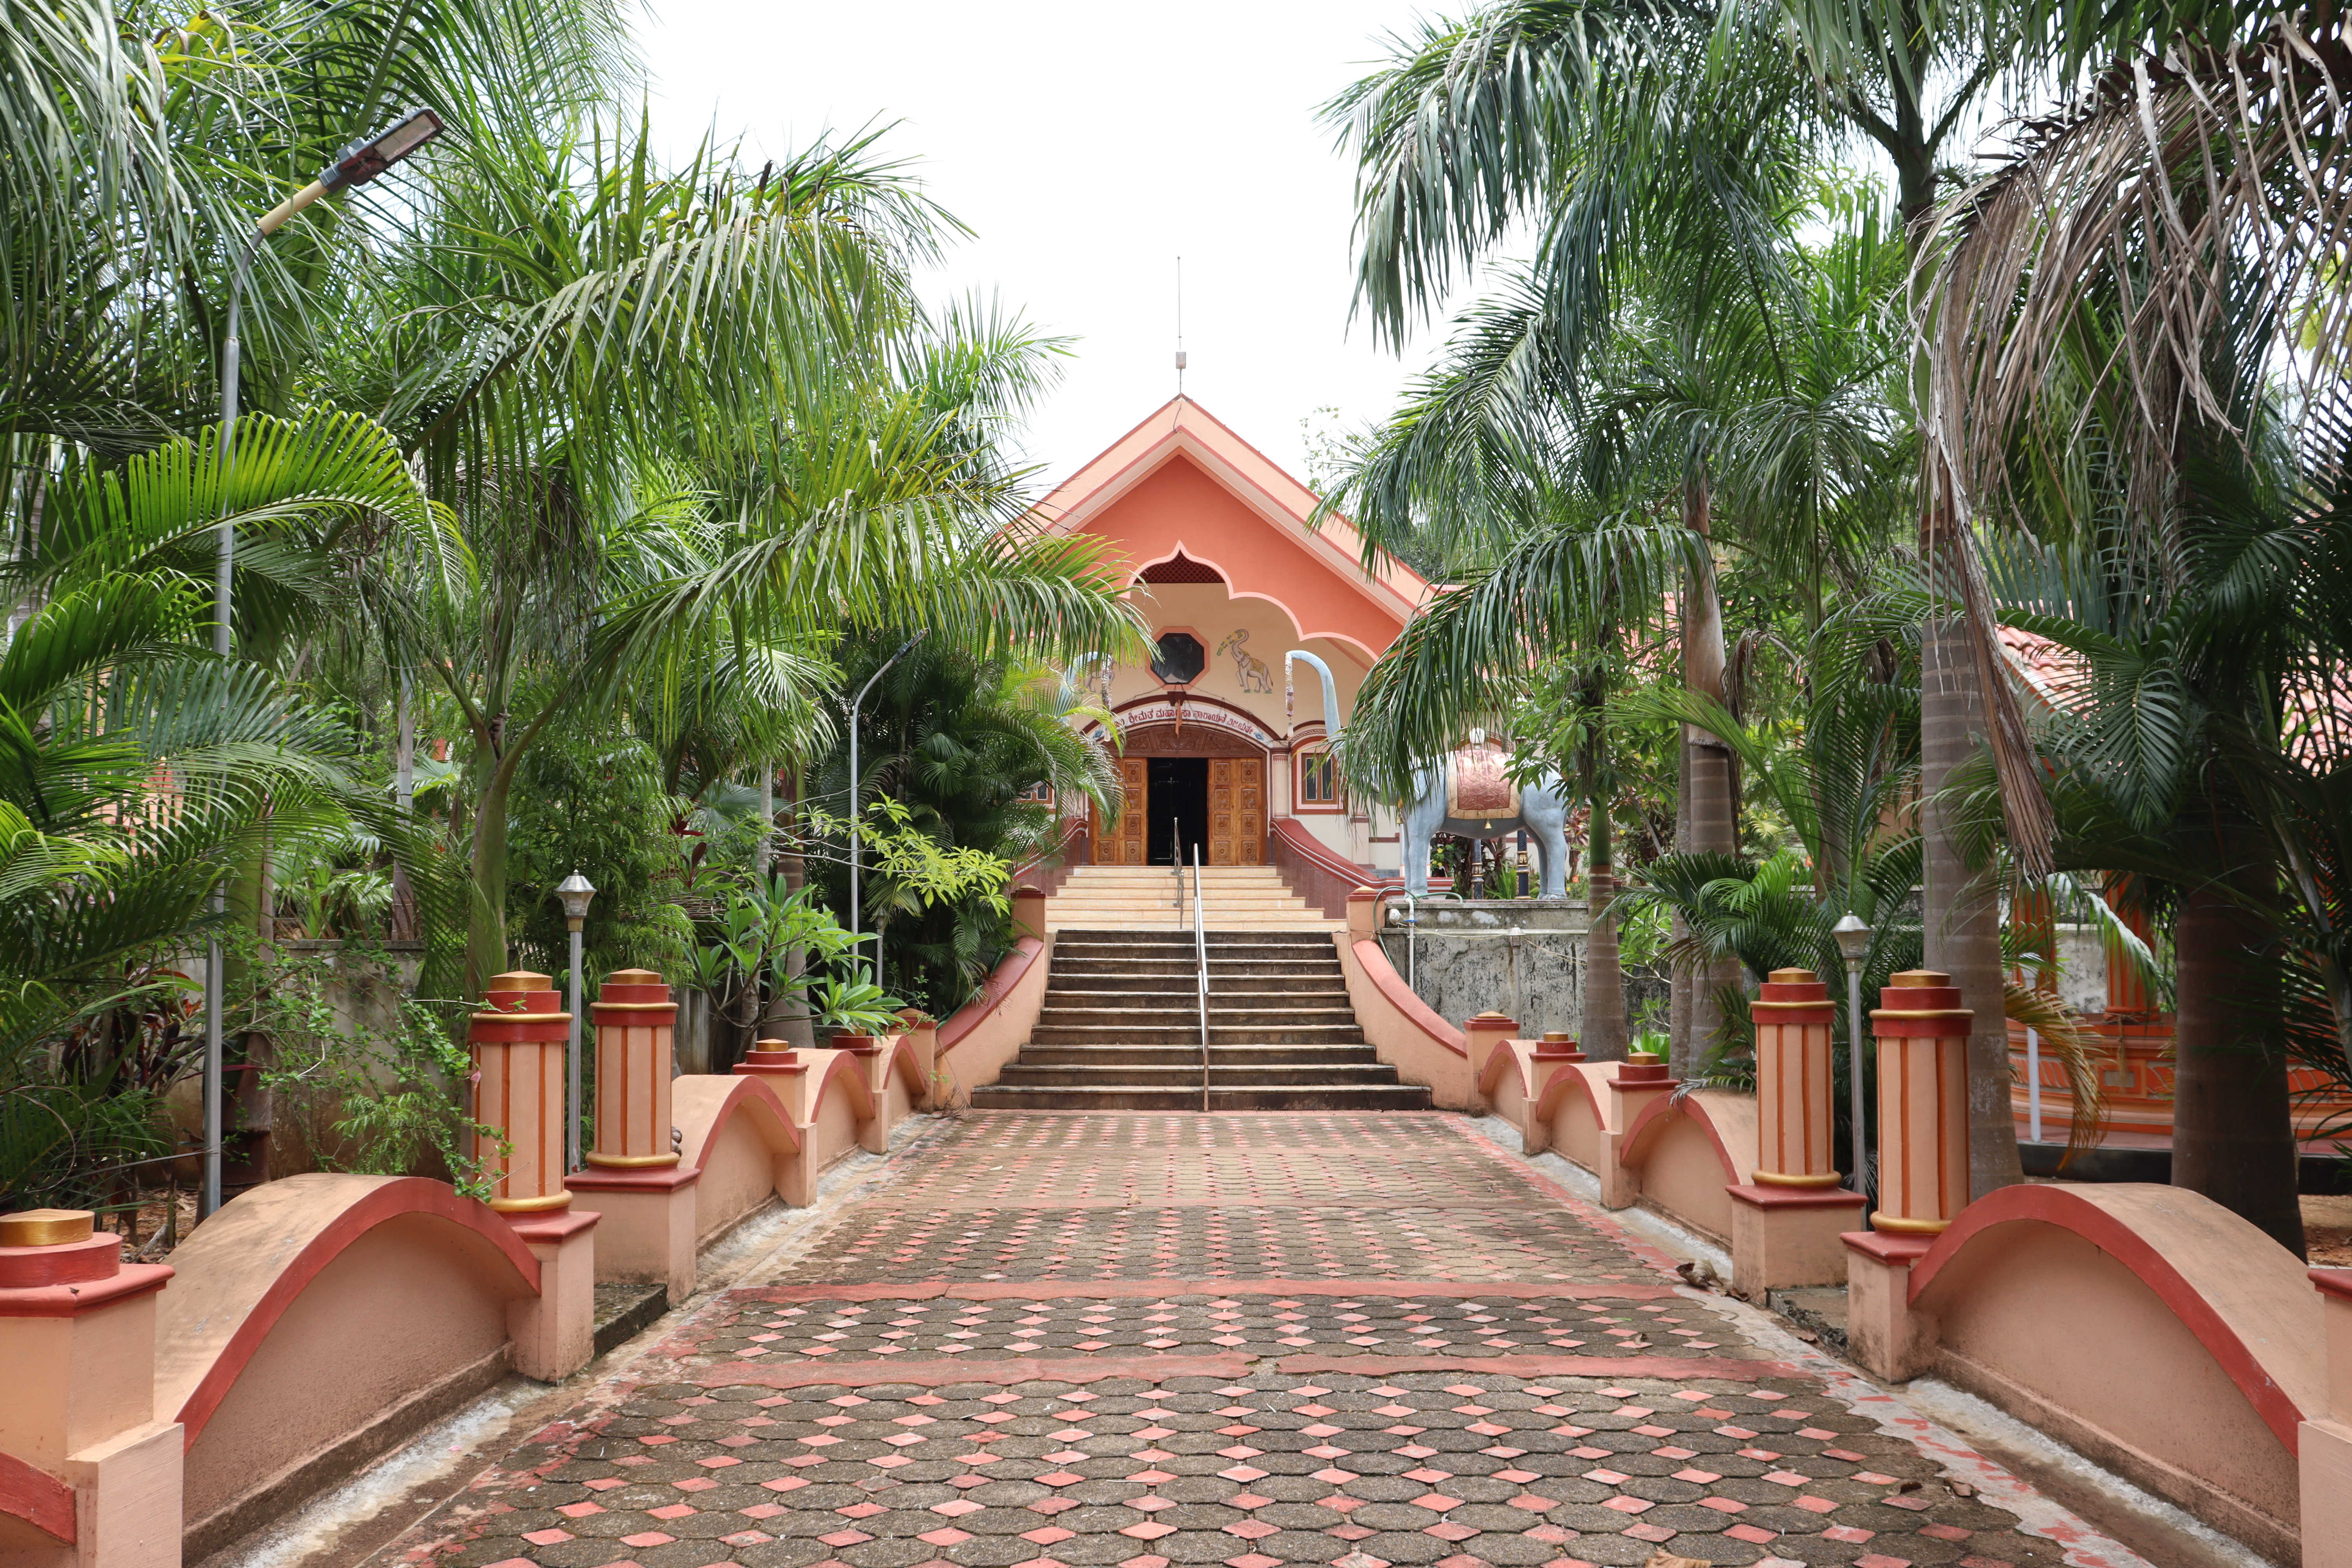 Shri Mahalasa Narayani Temple from the front in 2020